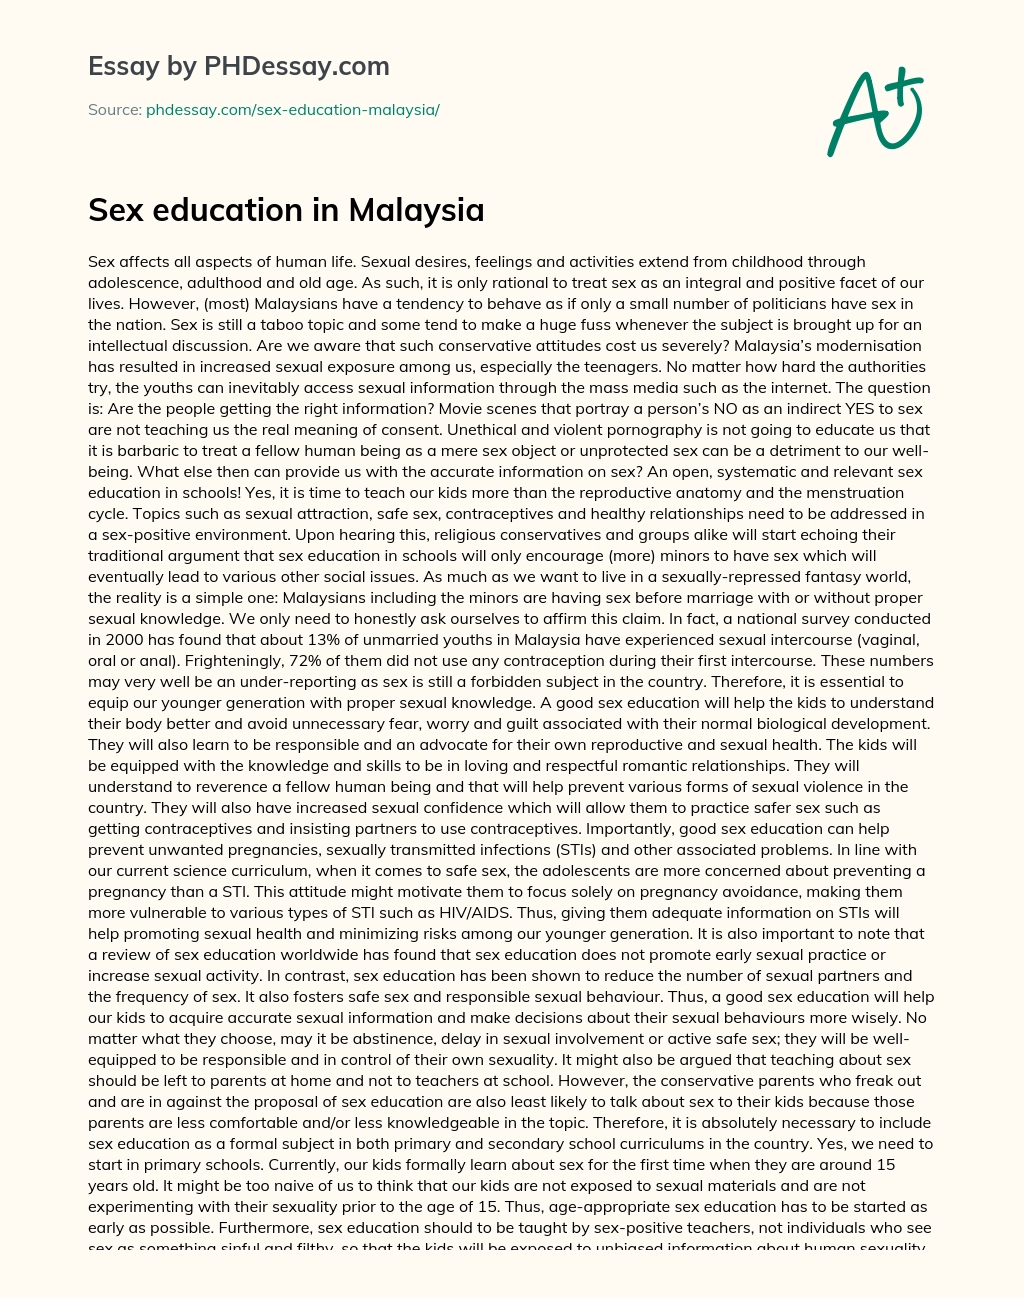 Sex education in Malaysia essay